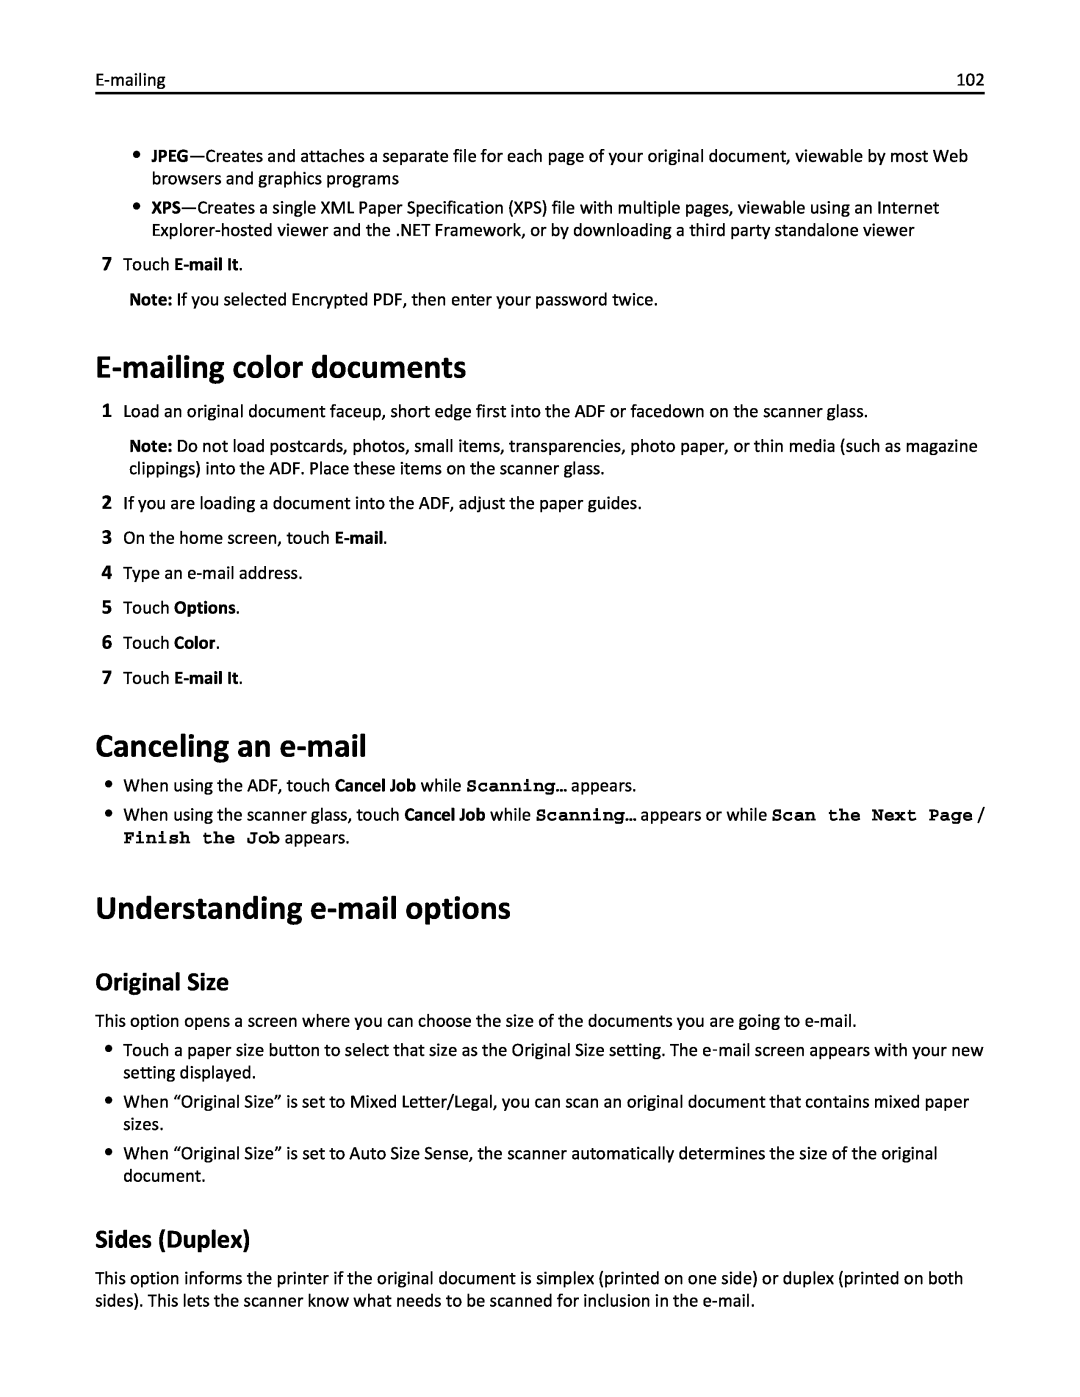 Lexmark 832, 432 E-mailing color documents, Canceling an e-mail, Understanding e-mail options, Original Size, Sides Duplex 